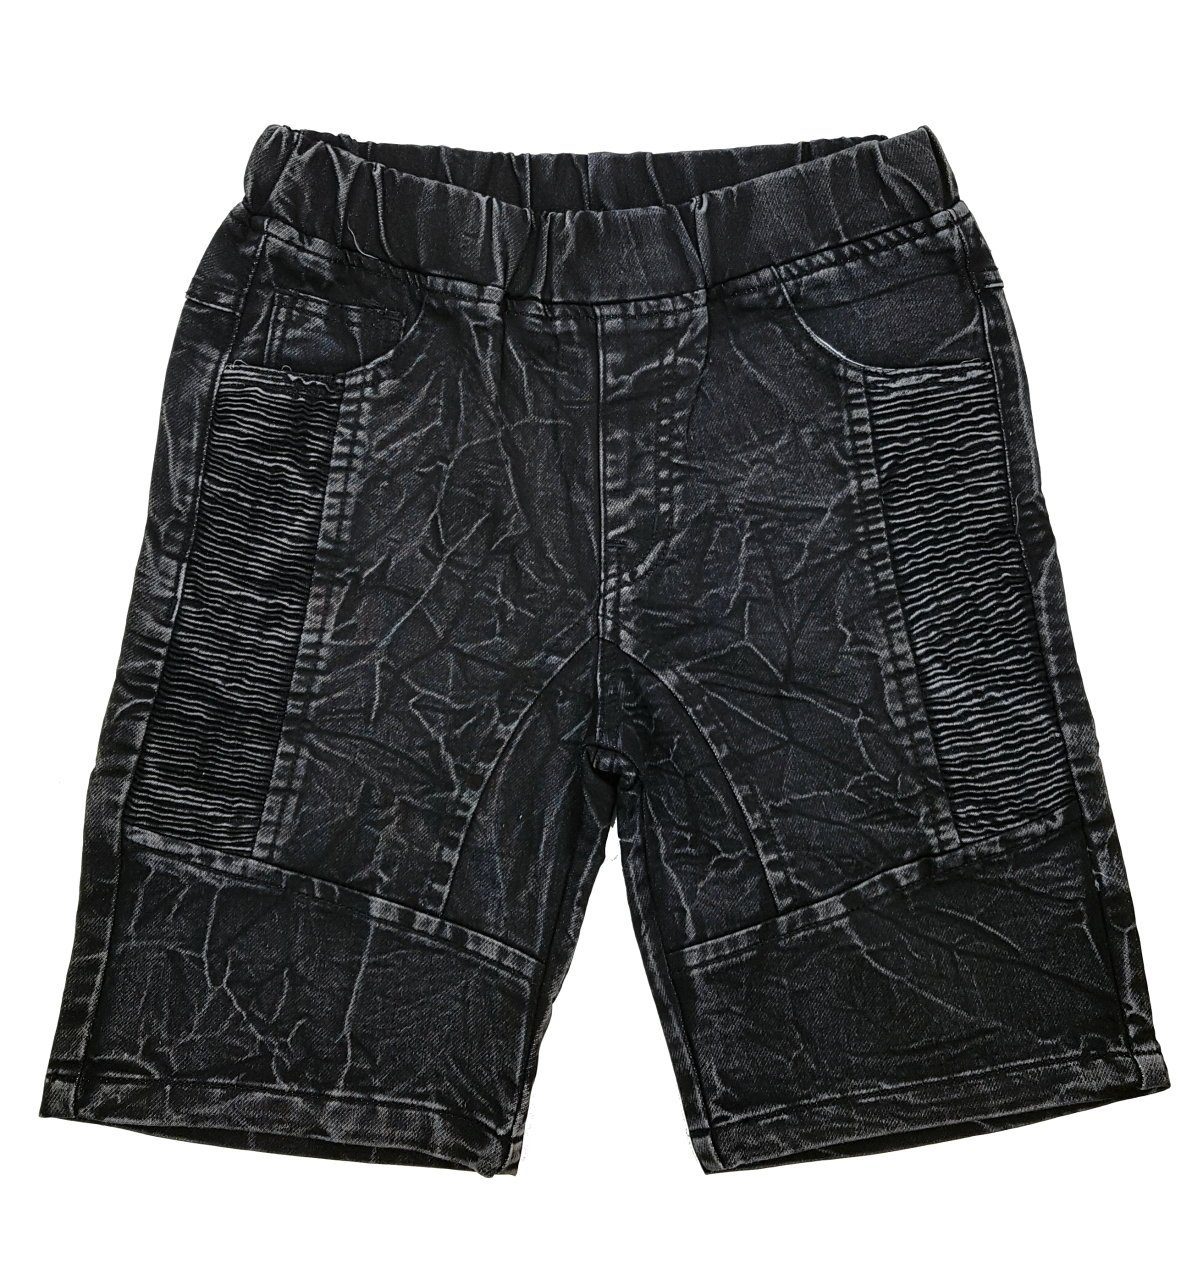 Fashion Boy Sweatshorts Bermuda Sommerhose, Jeans Hose, Stretch Jn205